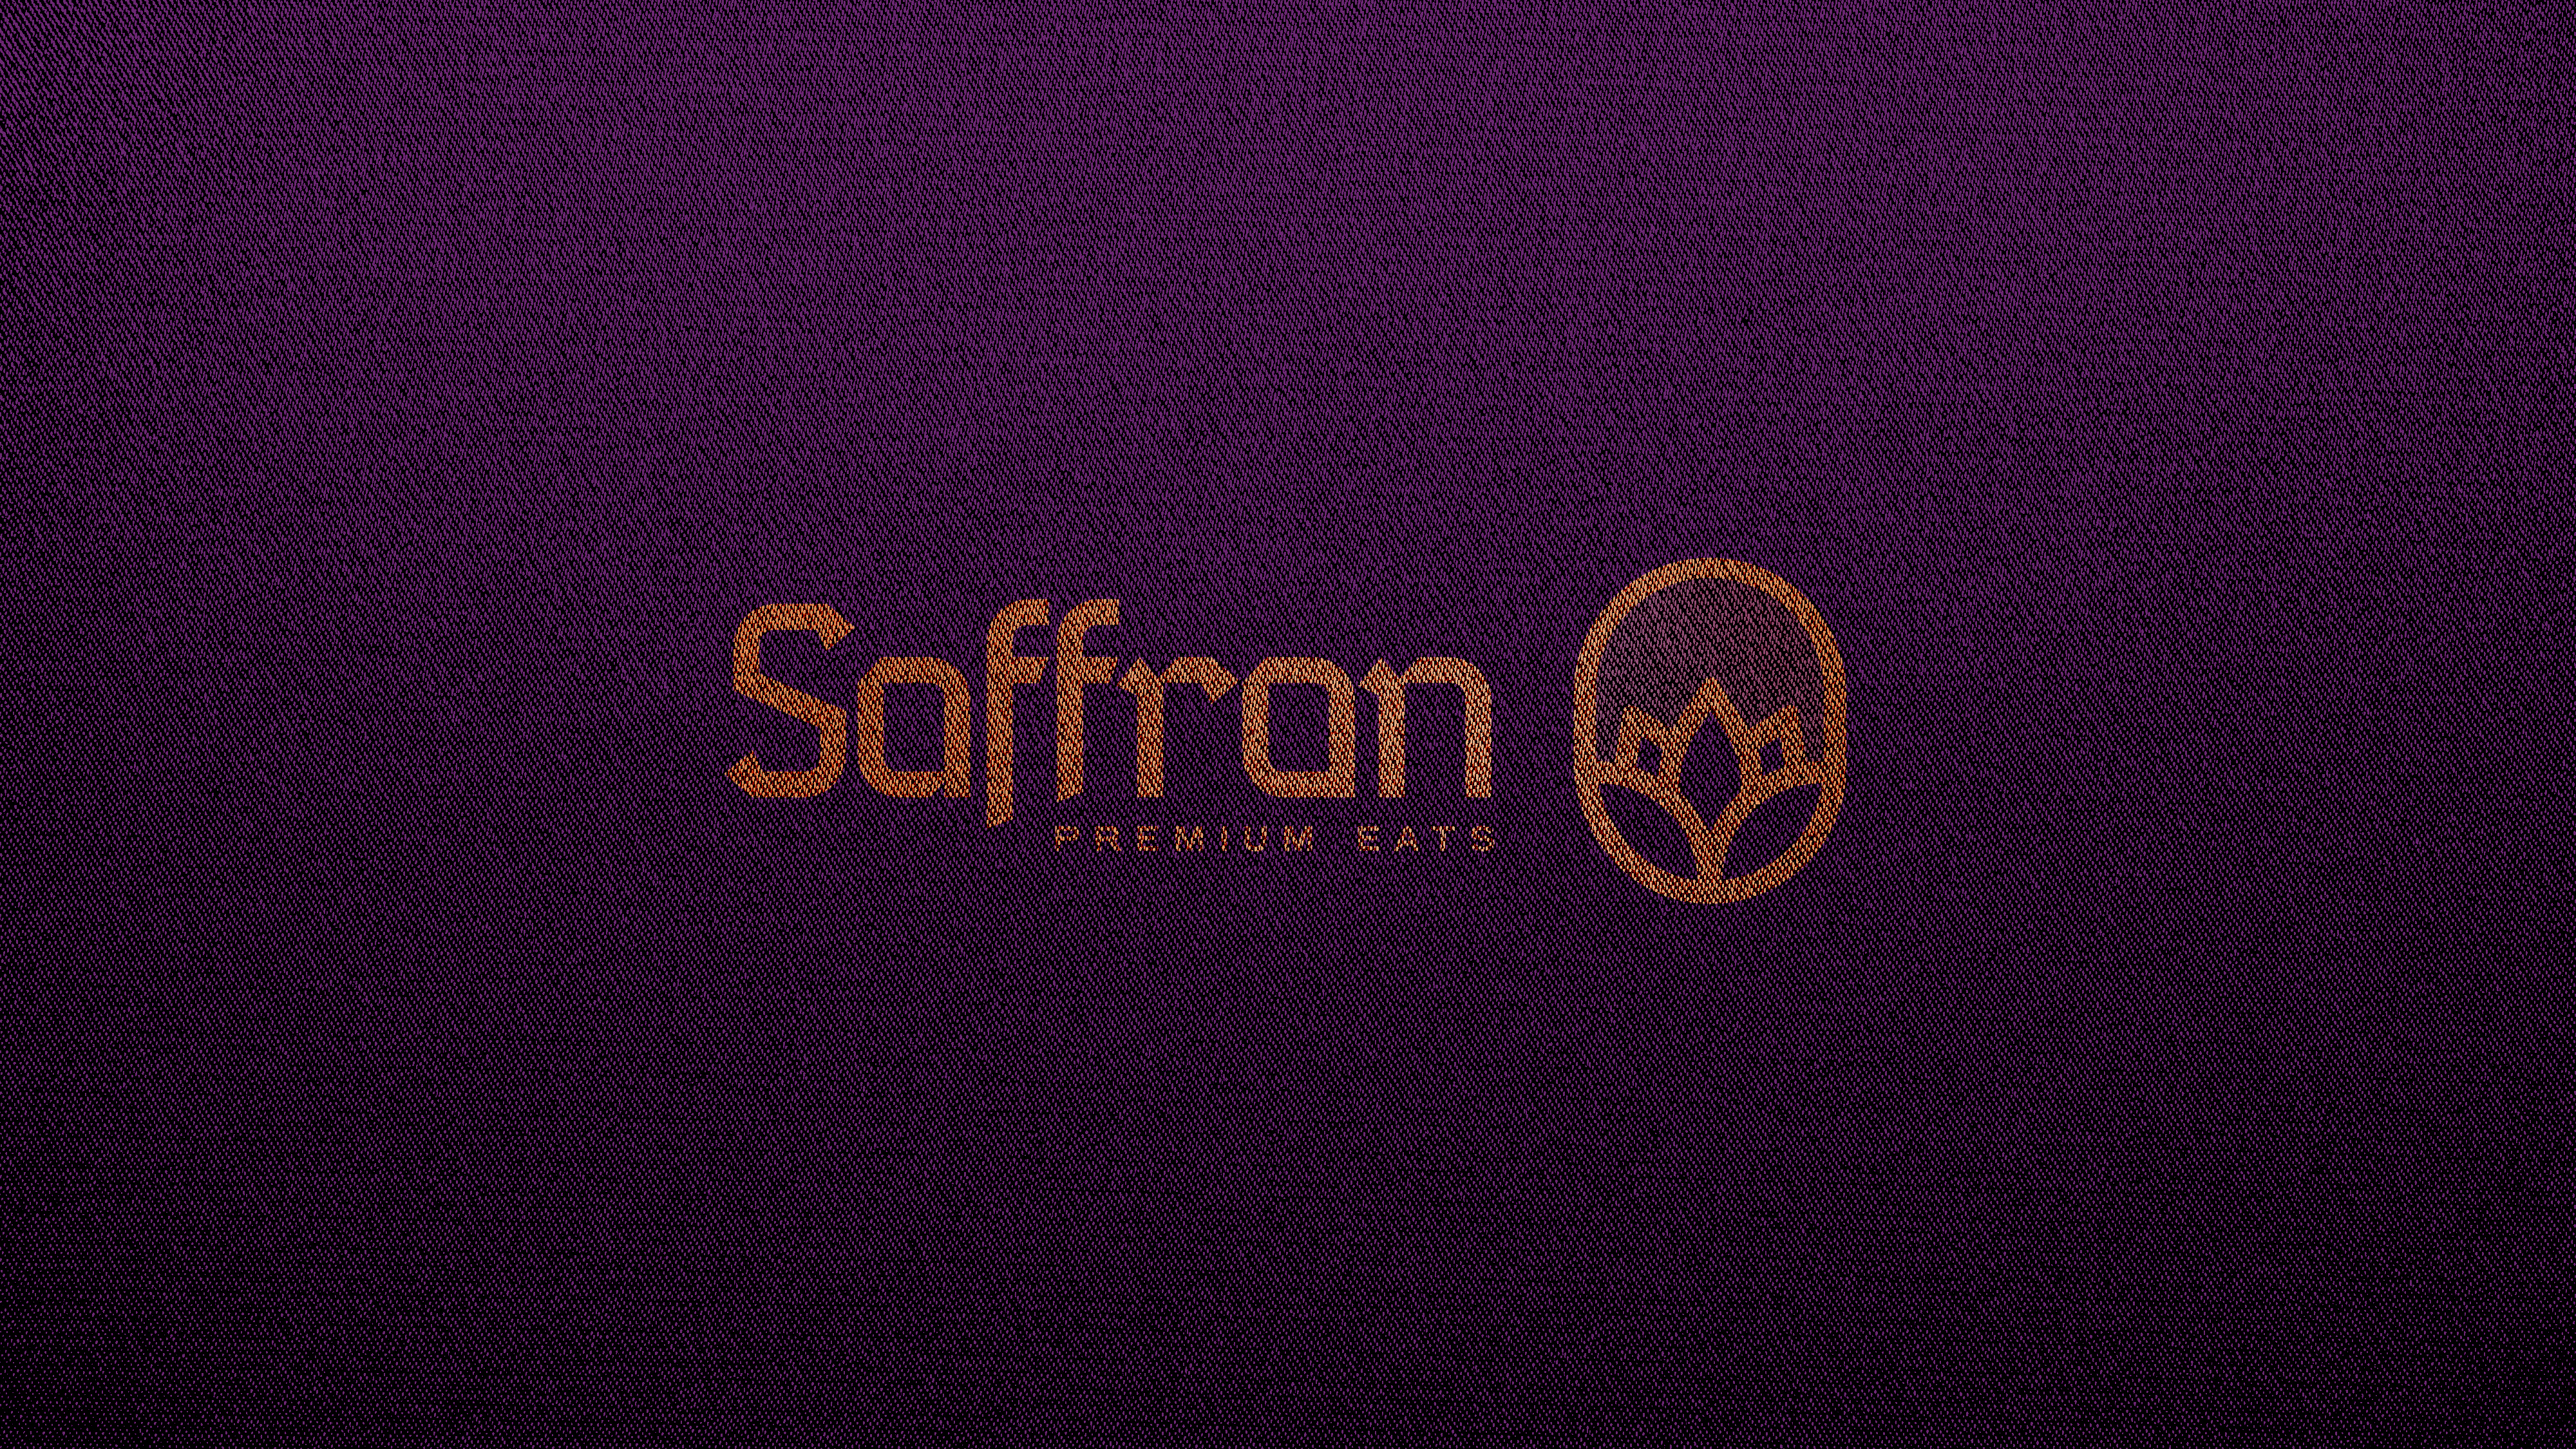 Saffron Premium Eats logo